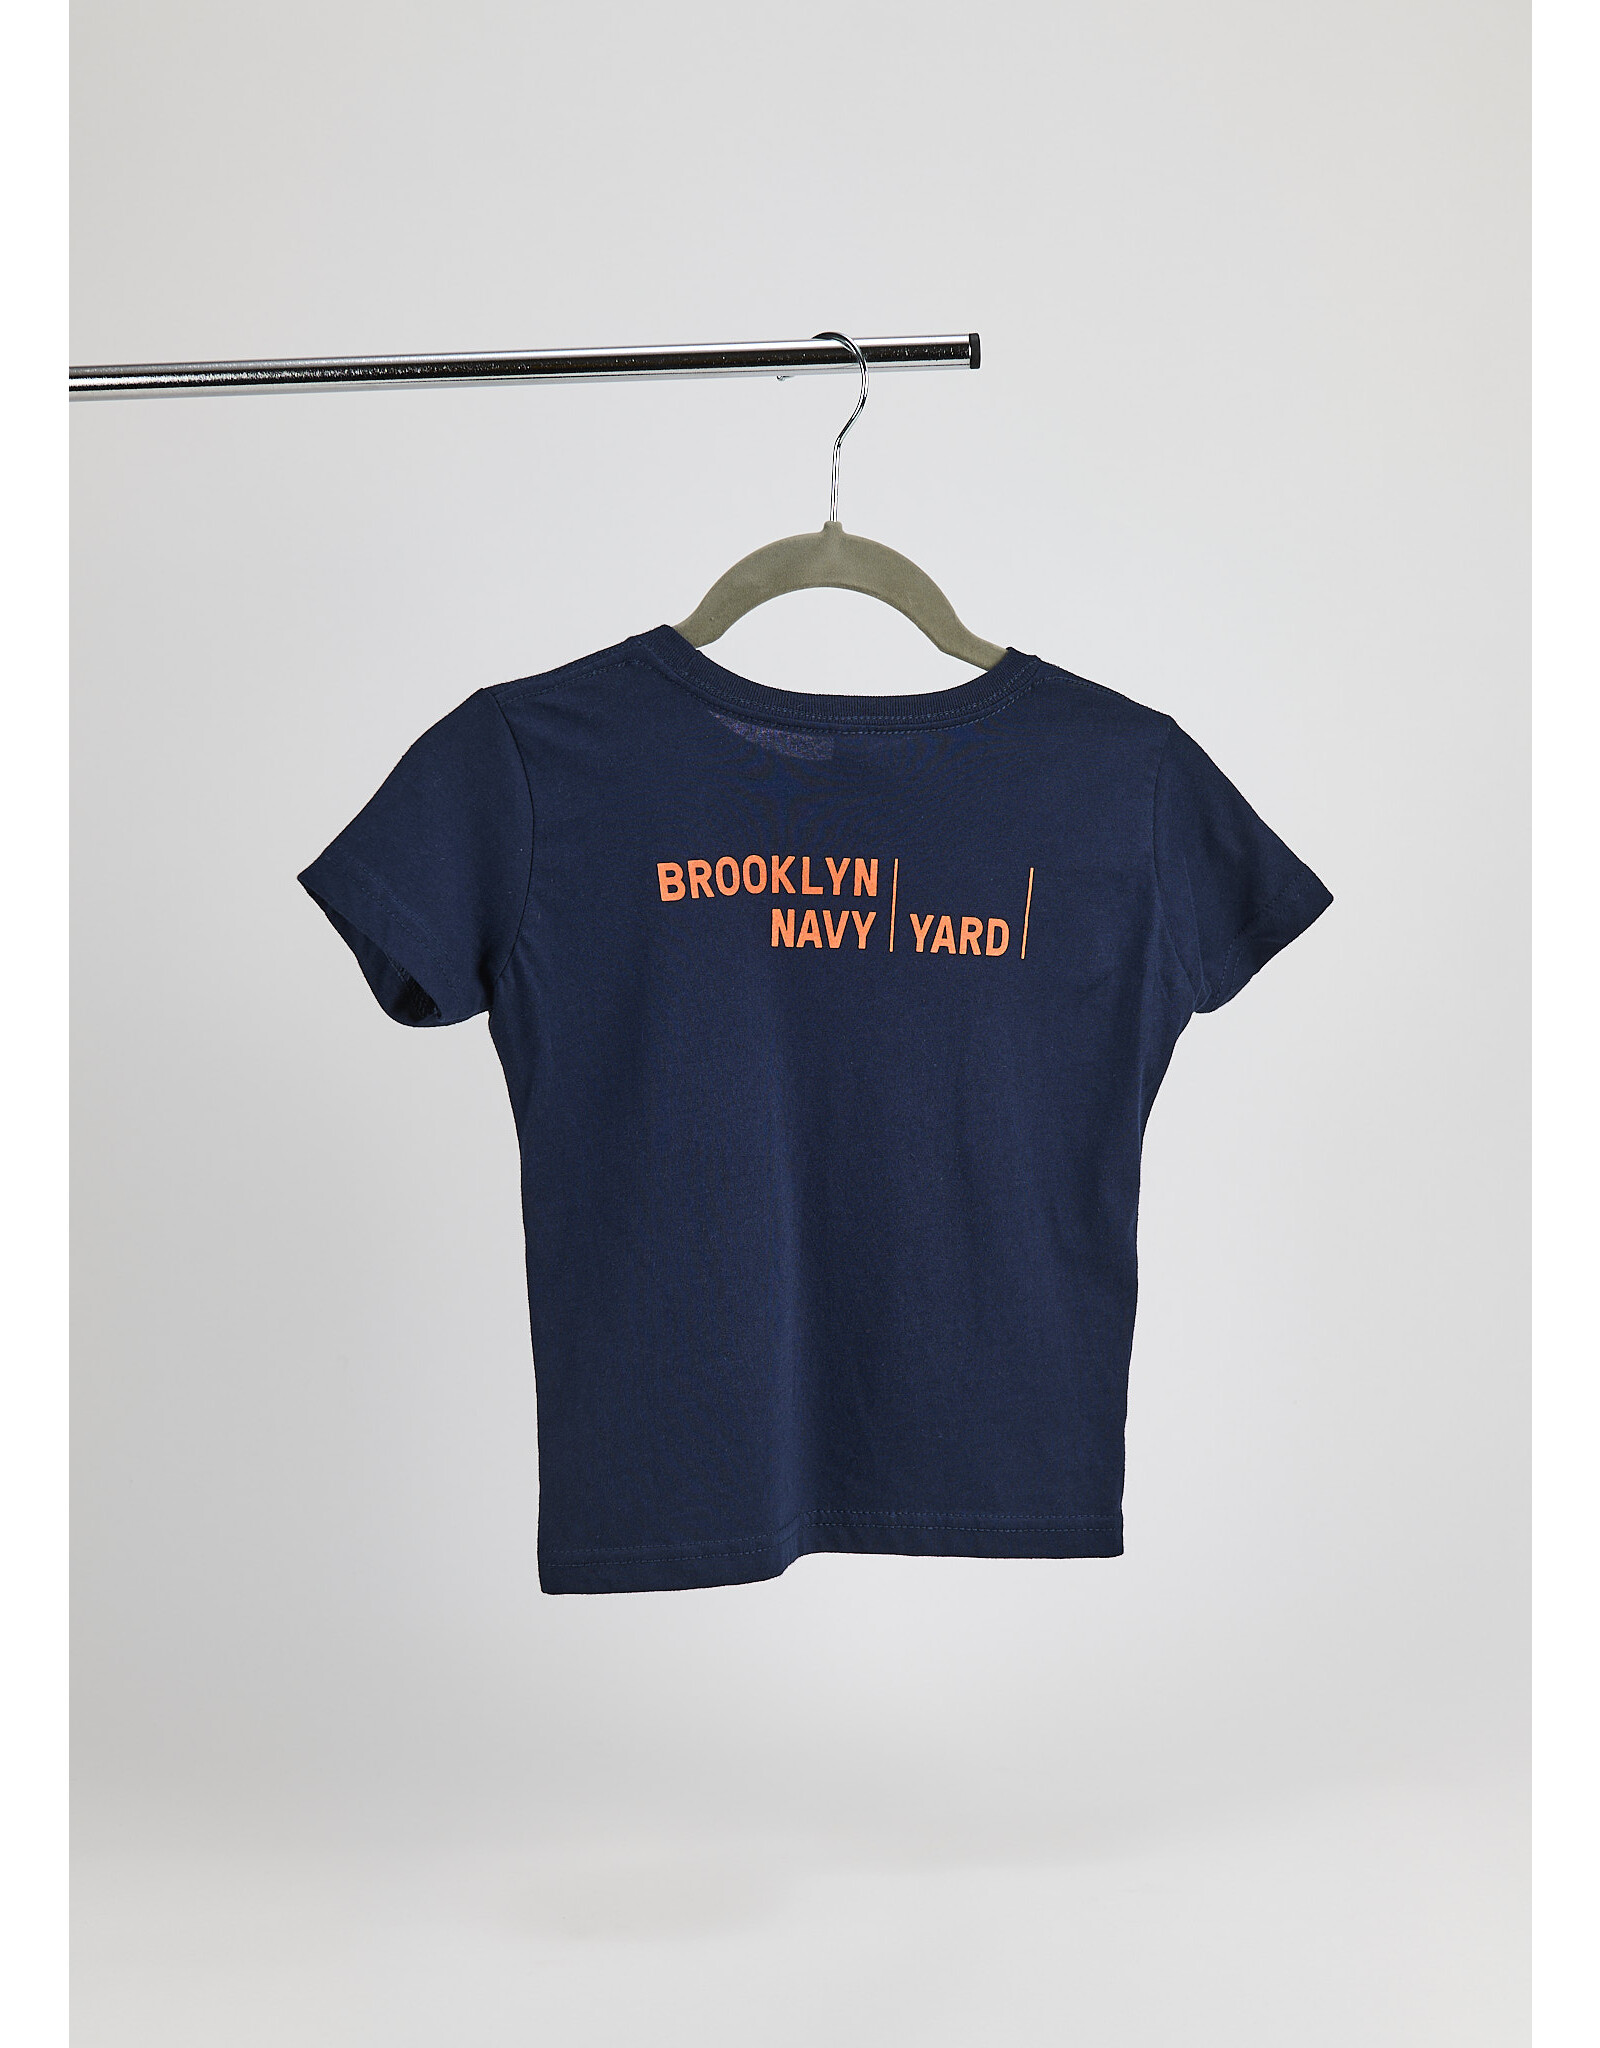 BNY Merchandise BNY Ship Shirt